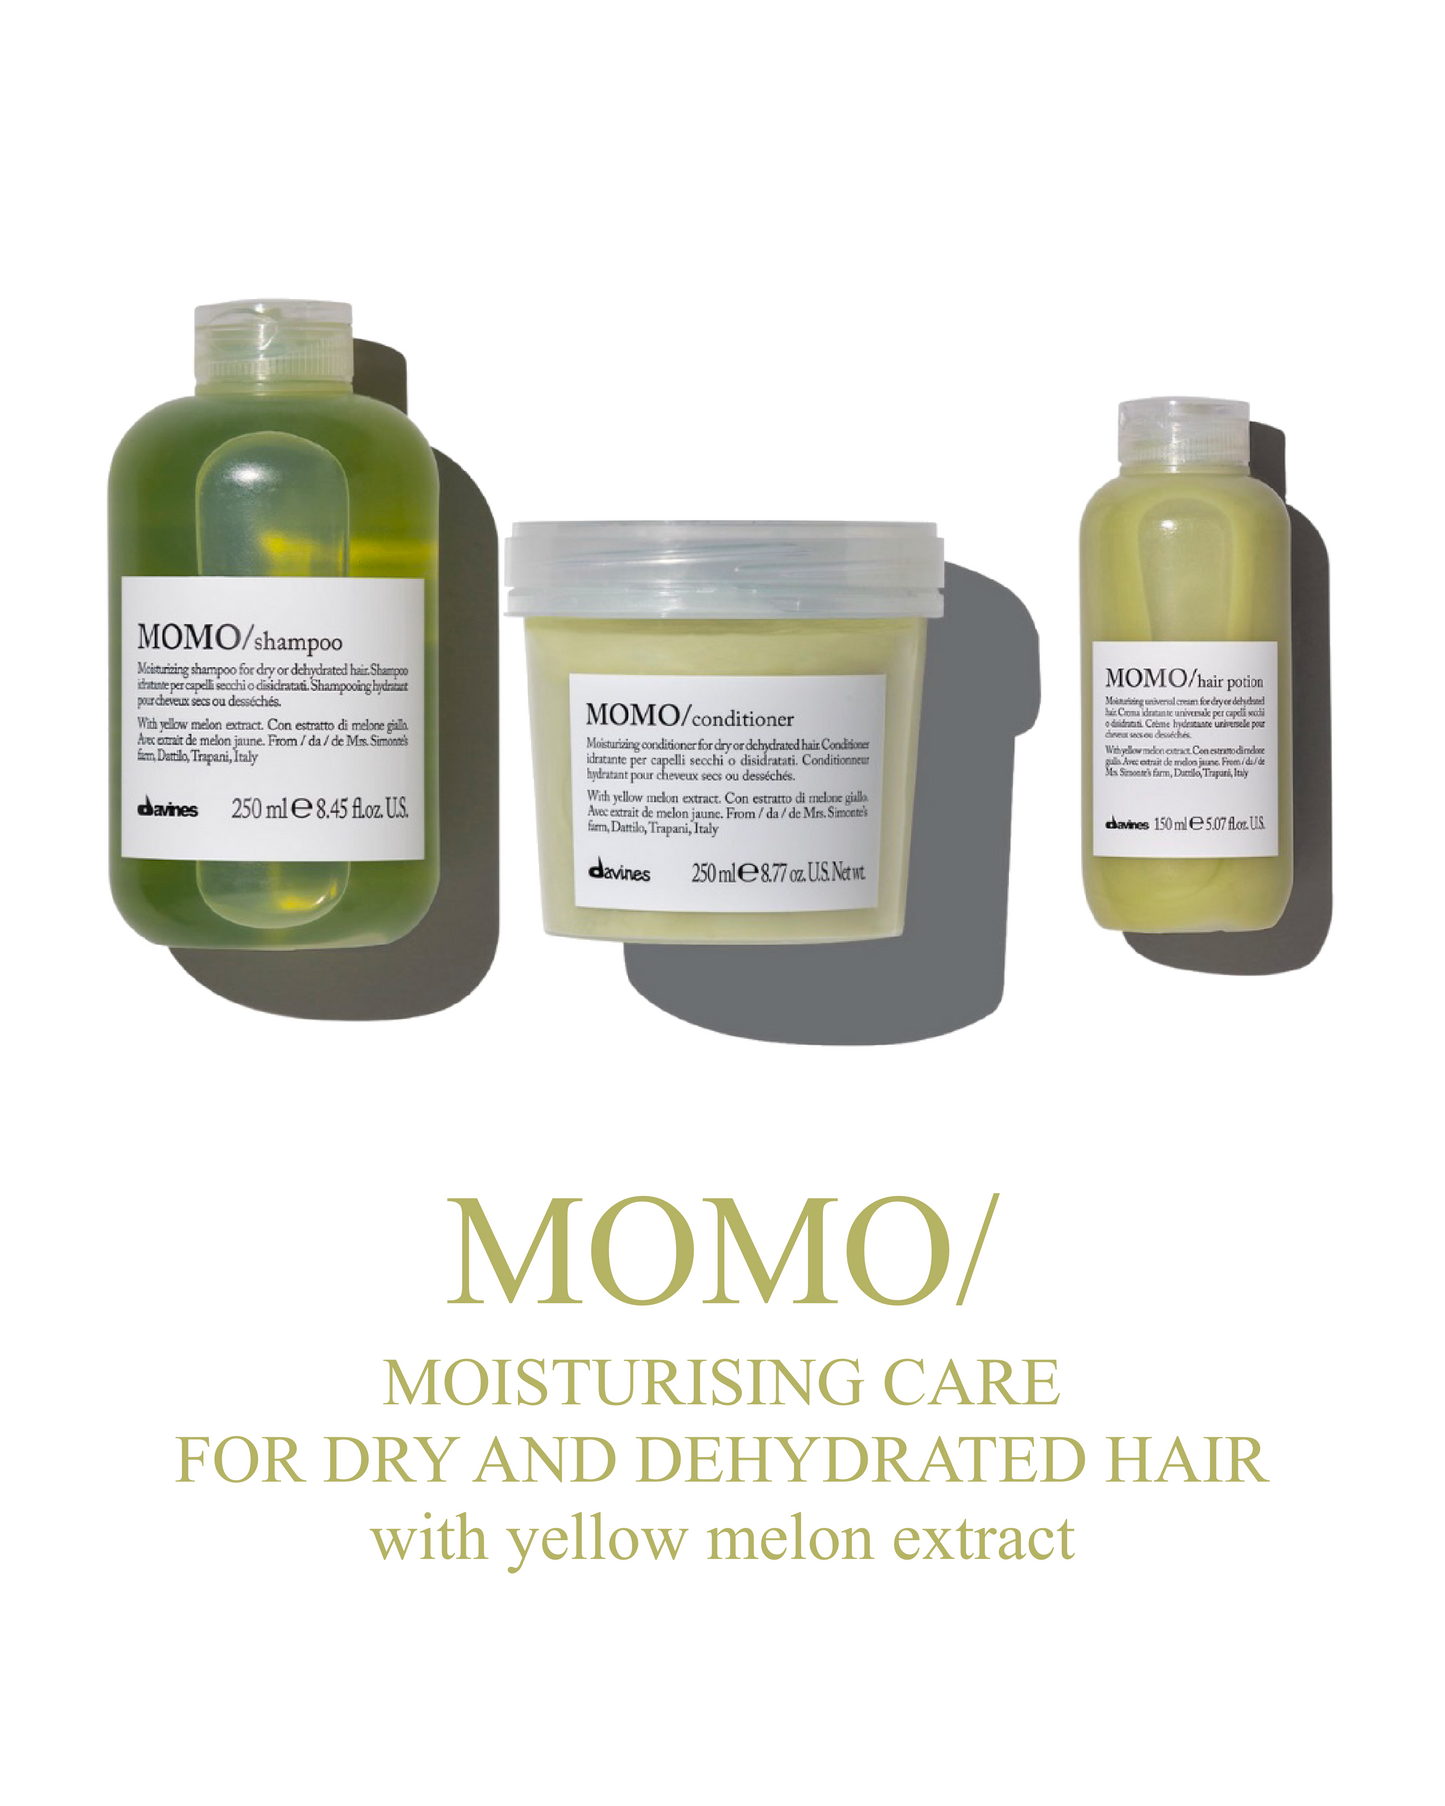 Momo shampoo